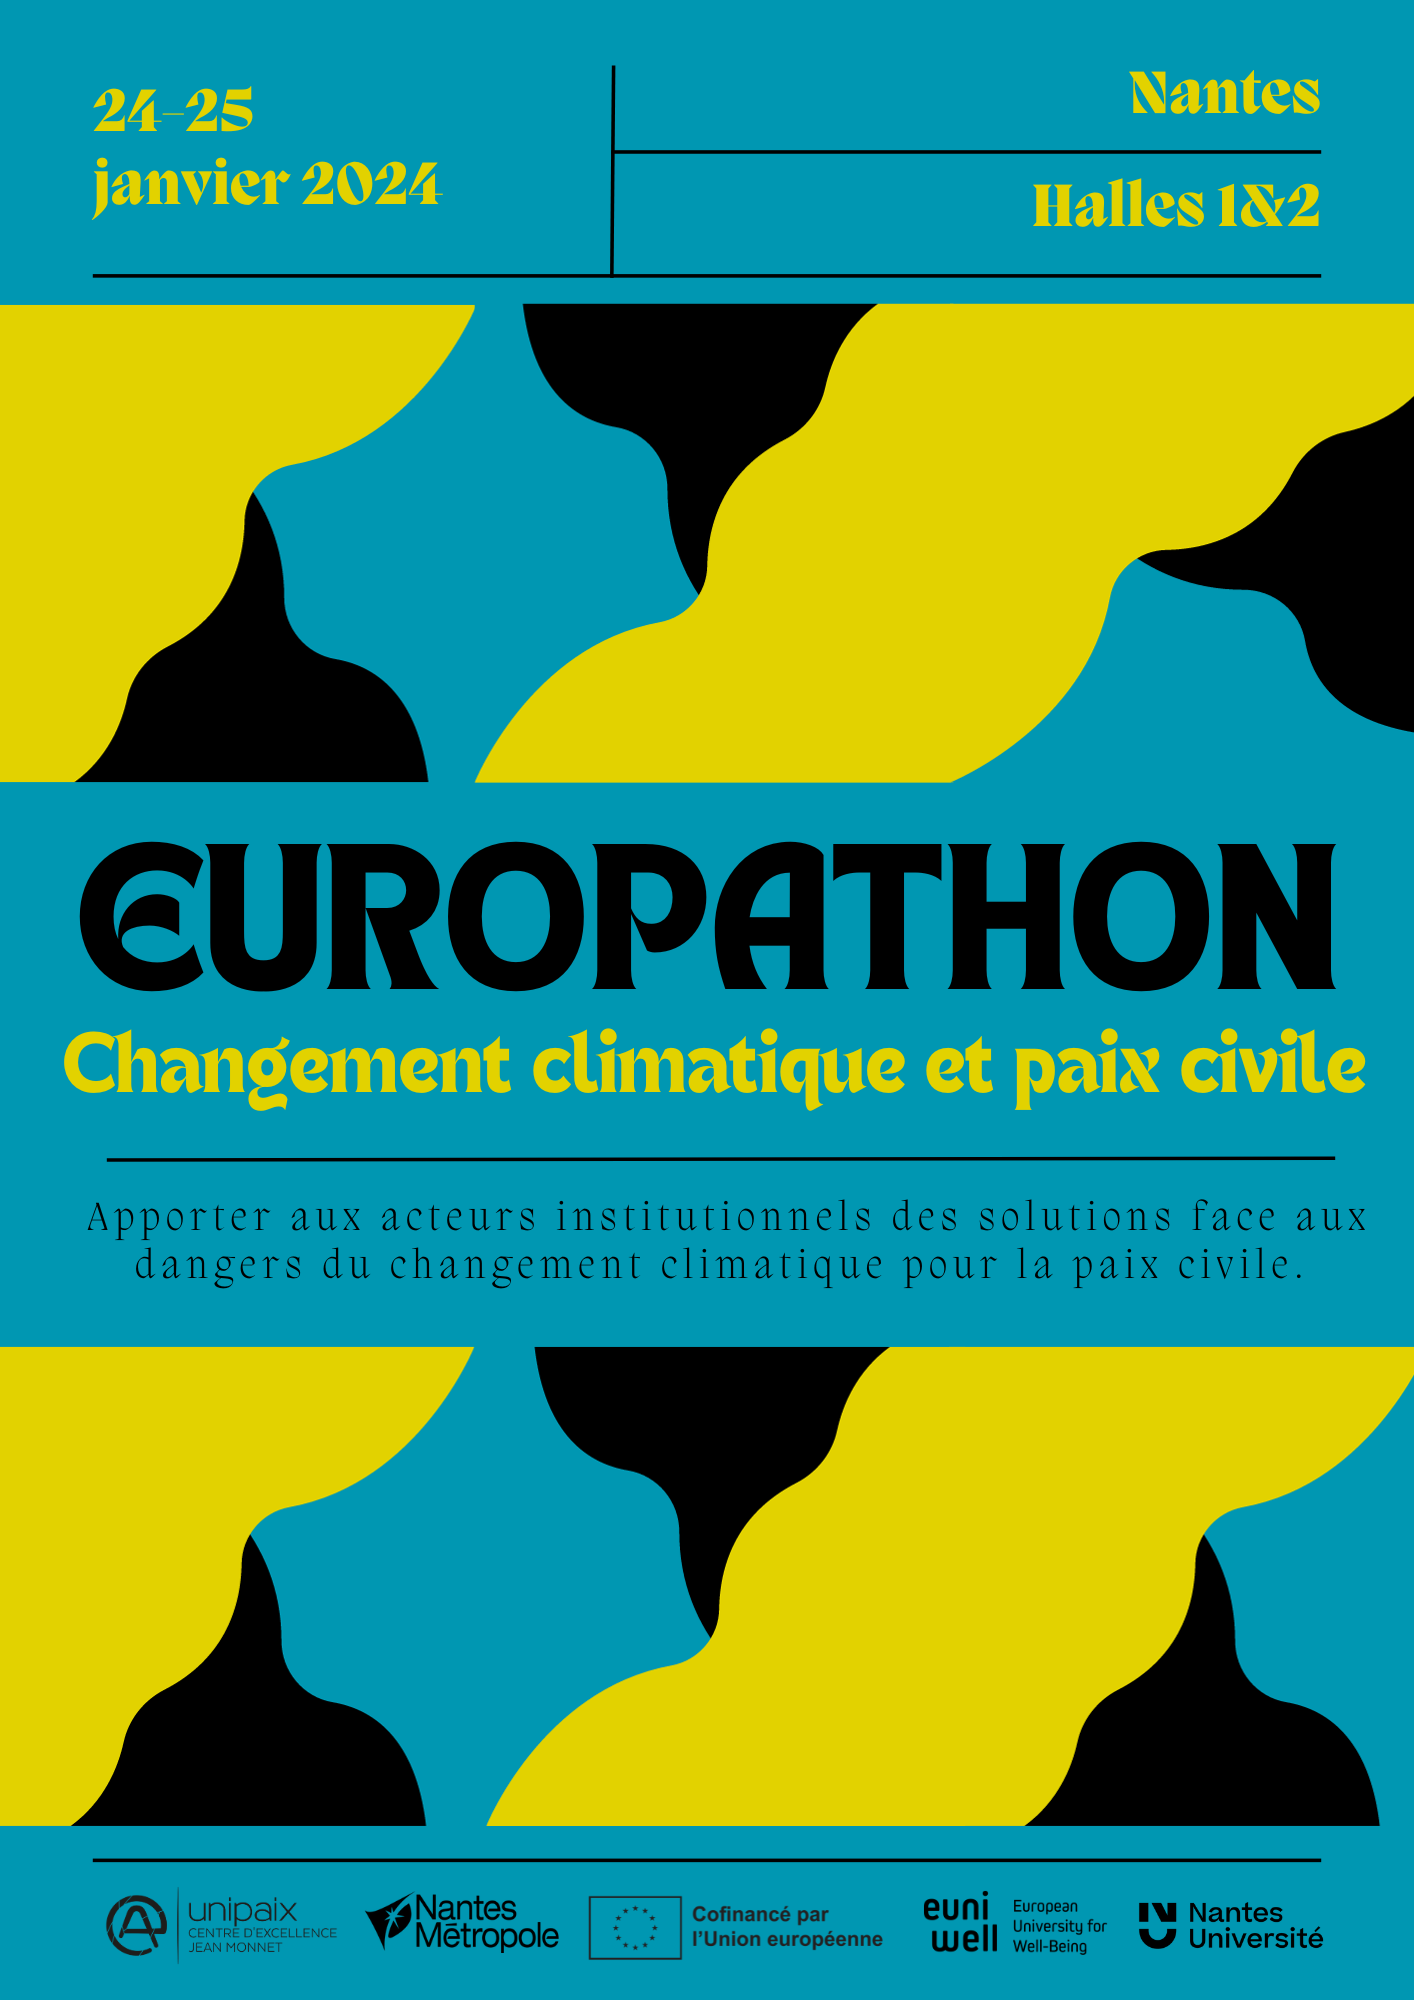 Europathon UniPaix Janvier 2024